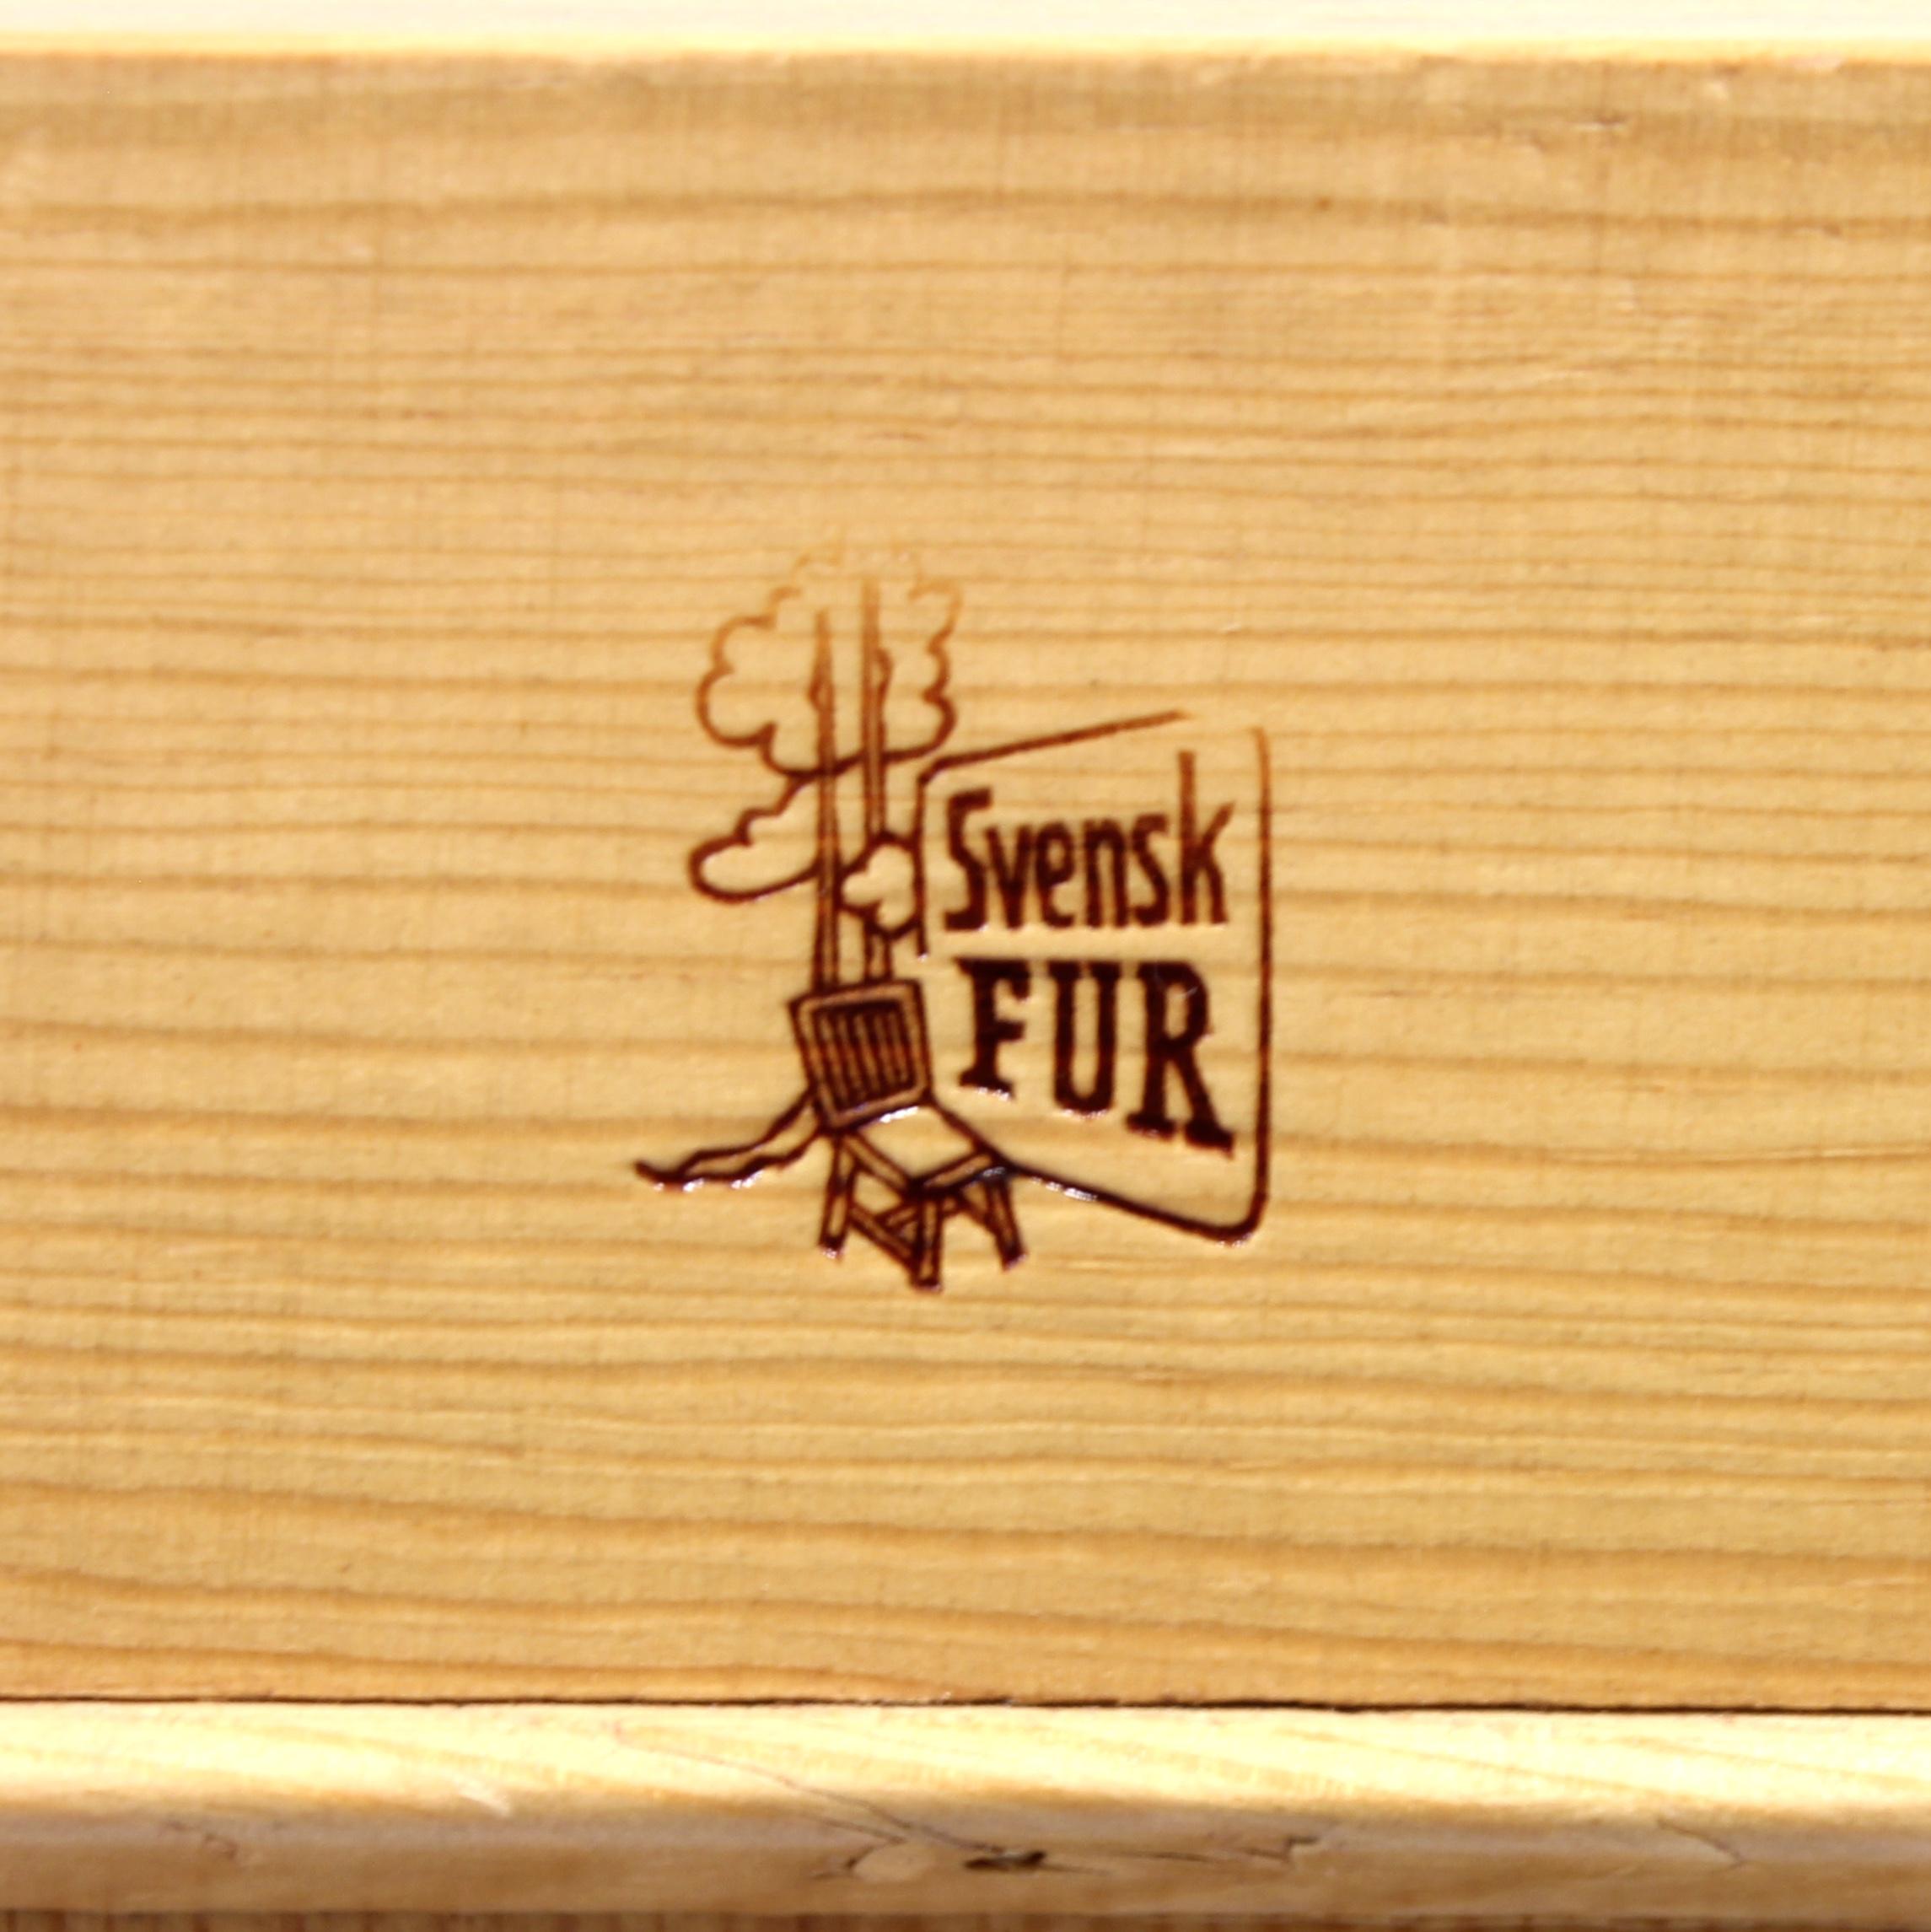 Swedish Pine Cabinet, Svensk Fur, Attributed to Göran Malmvall, Sportstugemöbel 13